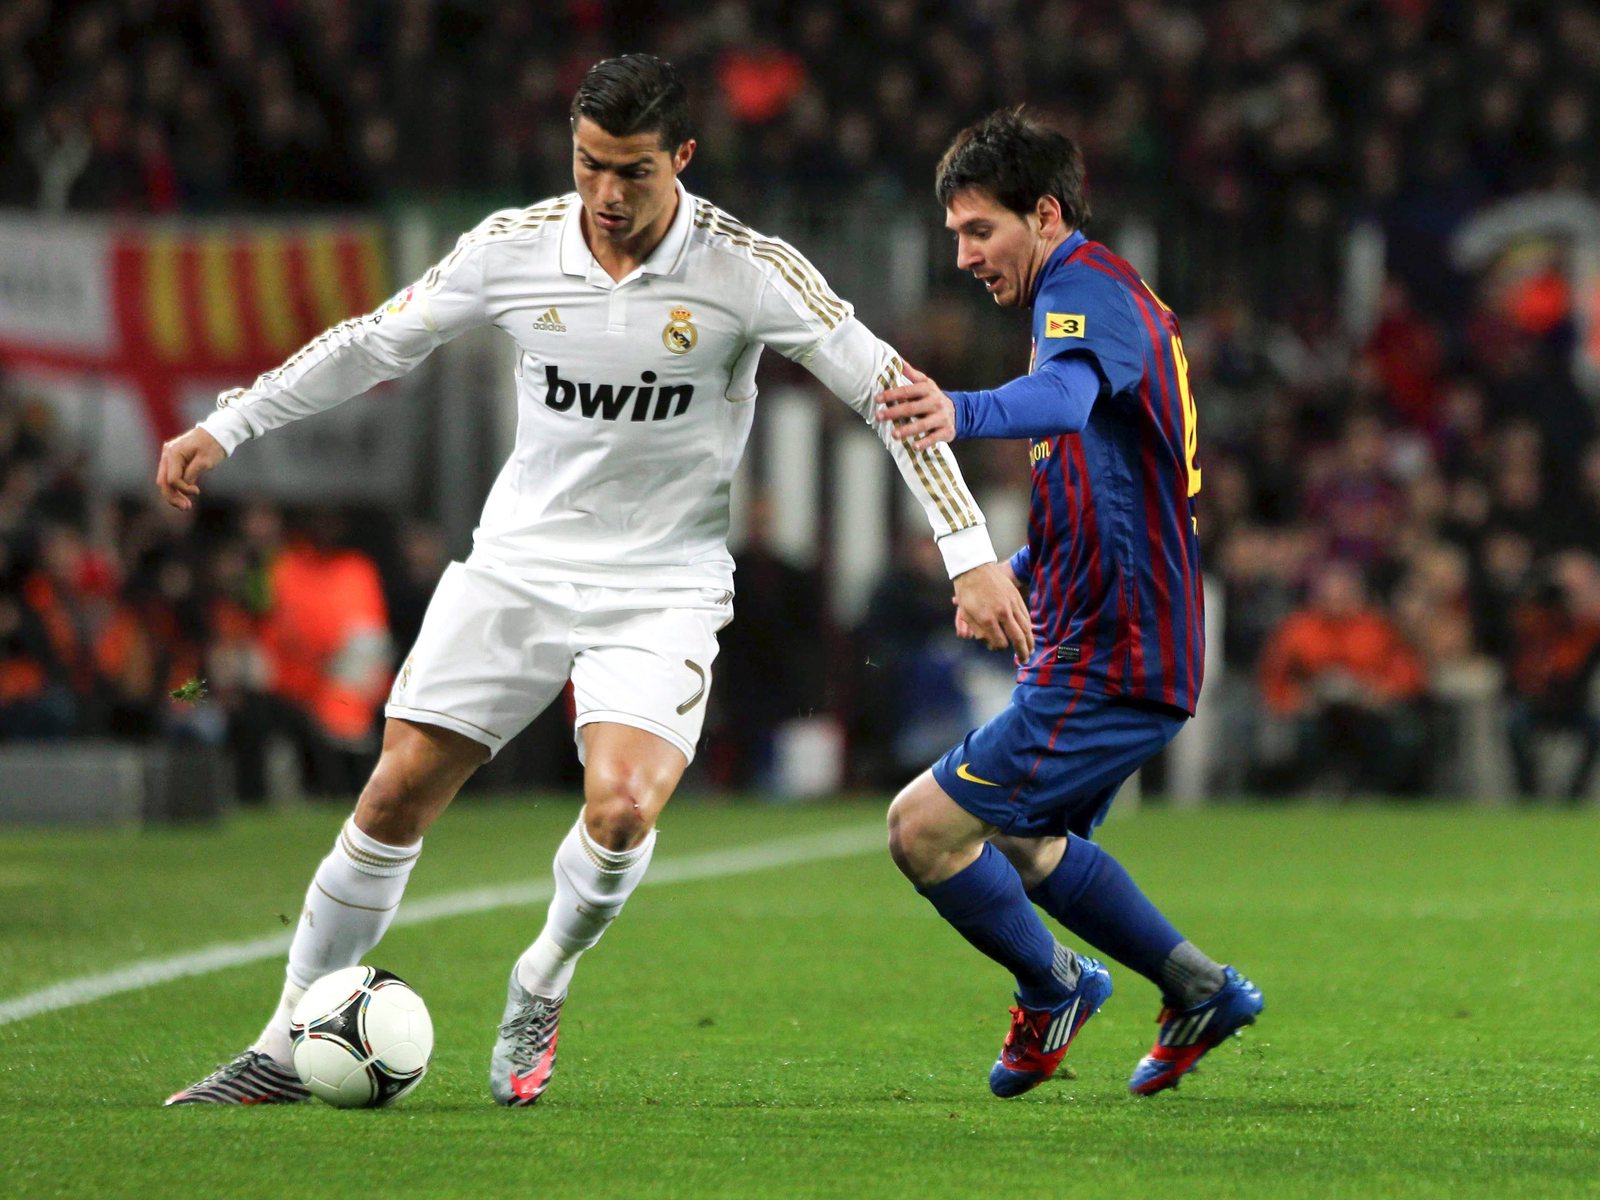 Ronaldo Vs Messi Fresh Hd Wallpapers 2012-13 | All Sports Stars